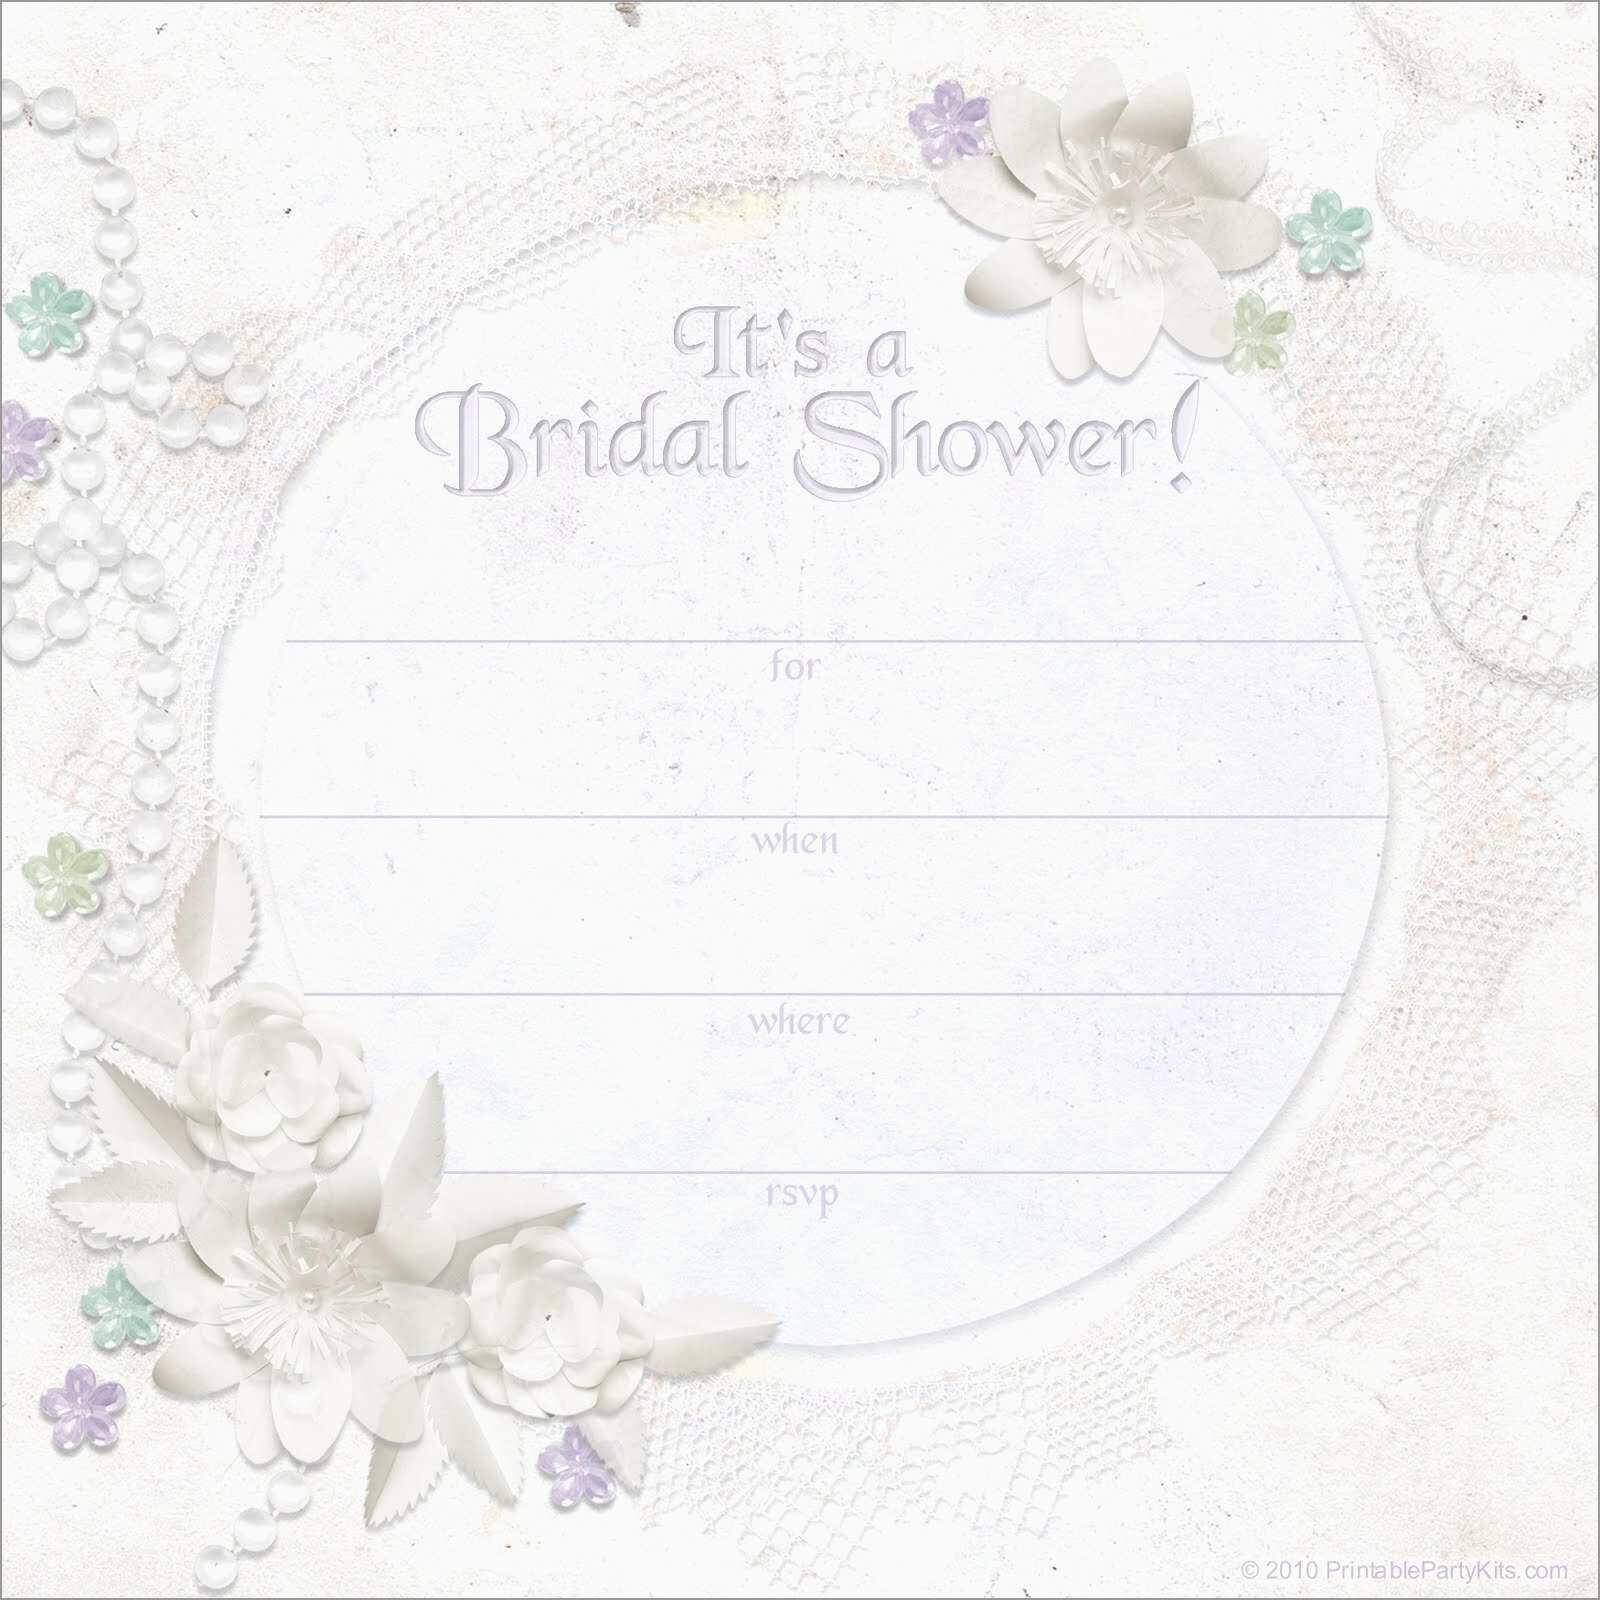 Free Wedding Shower Invitation Templates Good Wedding Shower Throughout Blank Bridal Shower Invitations Templates